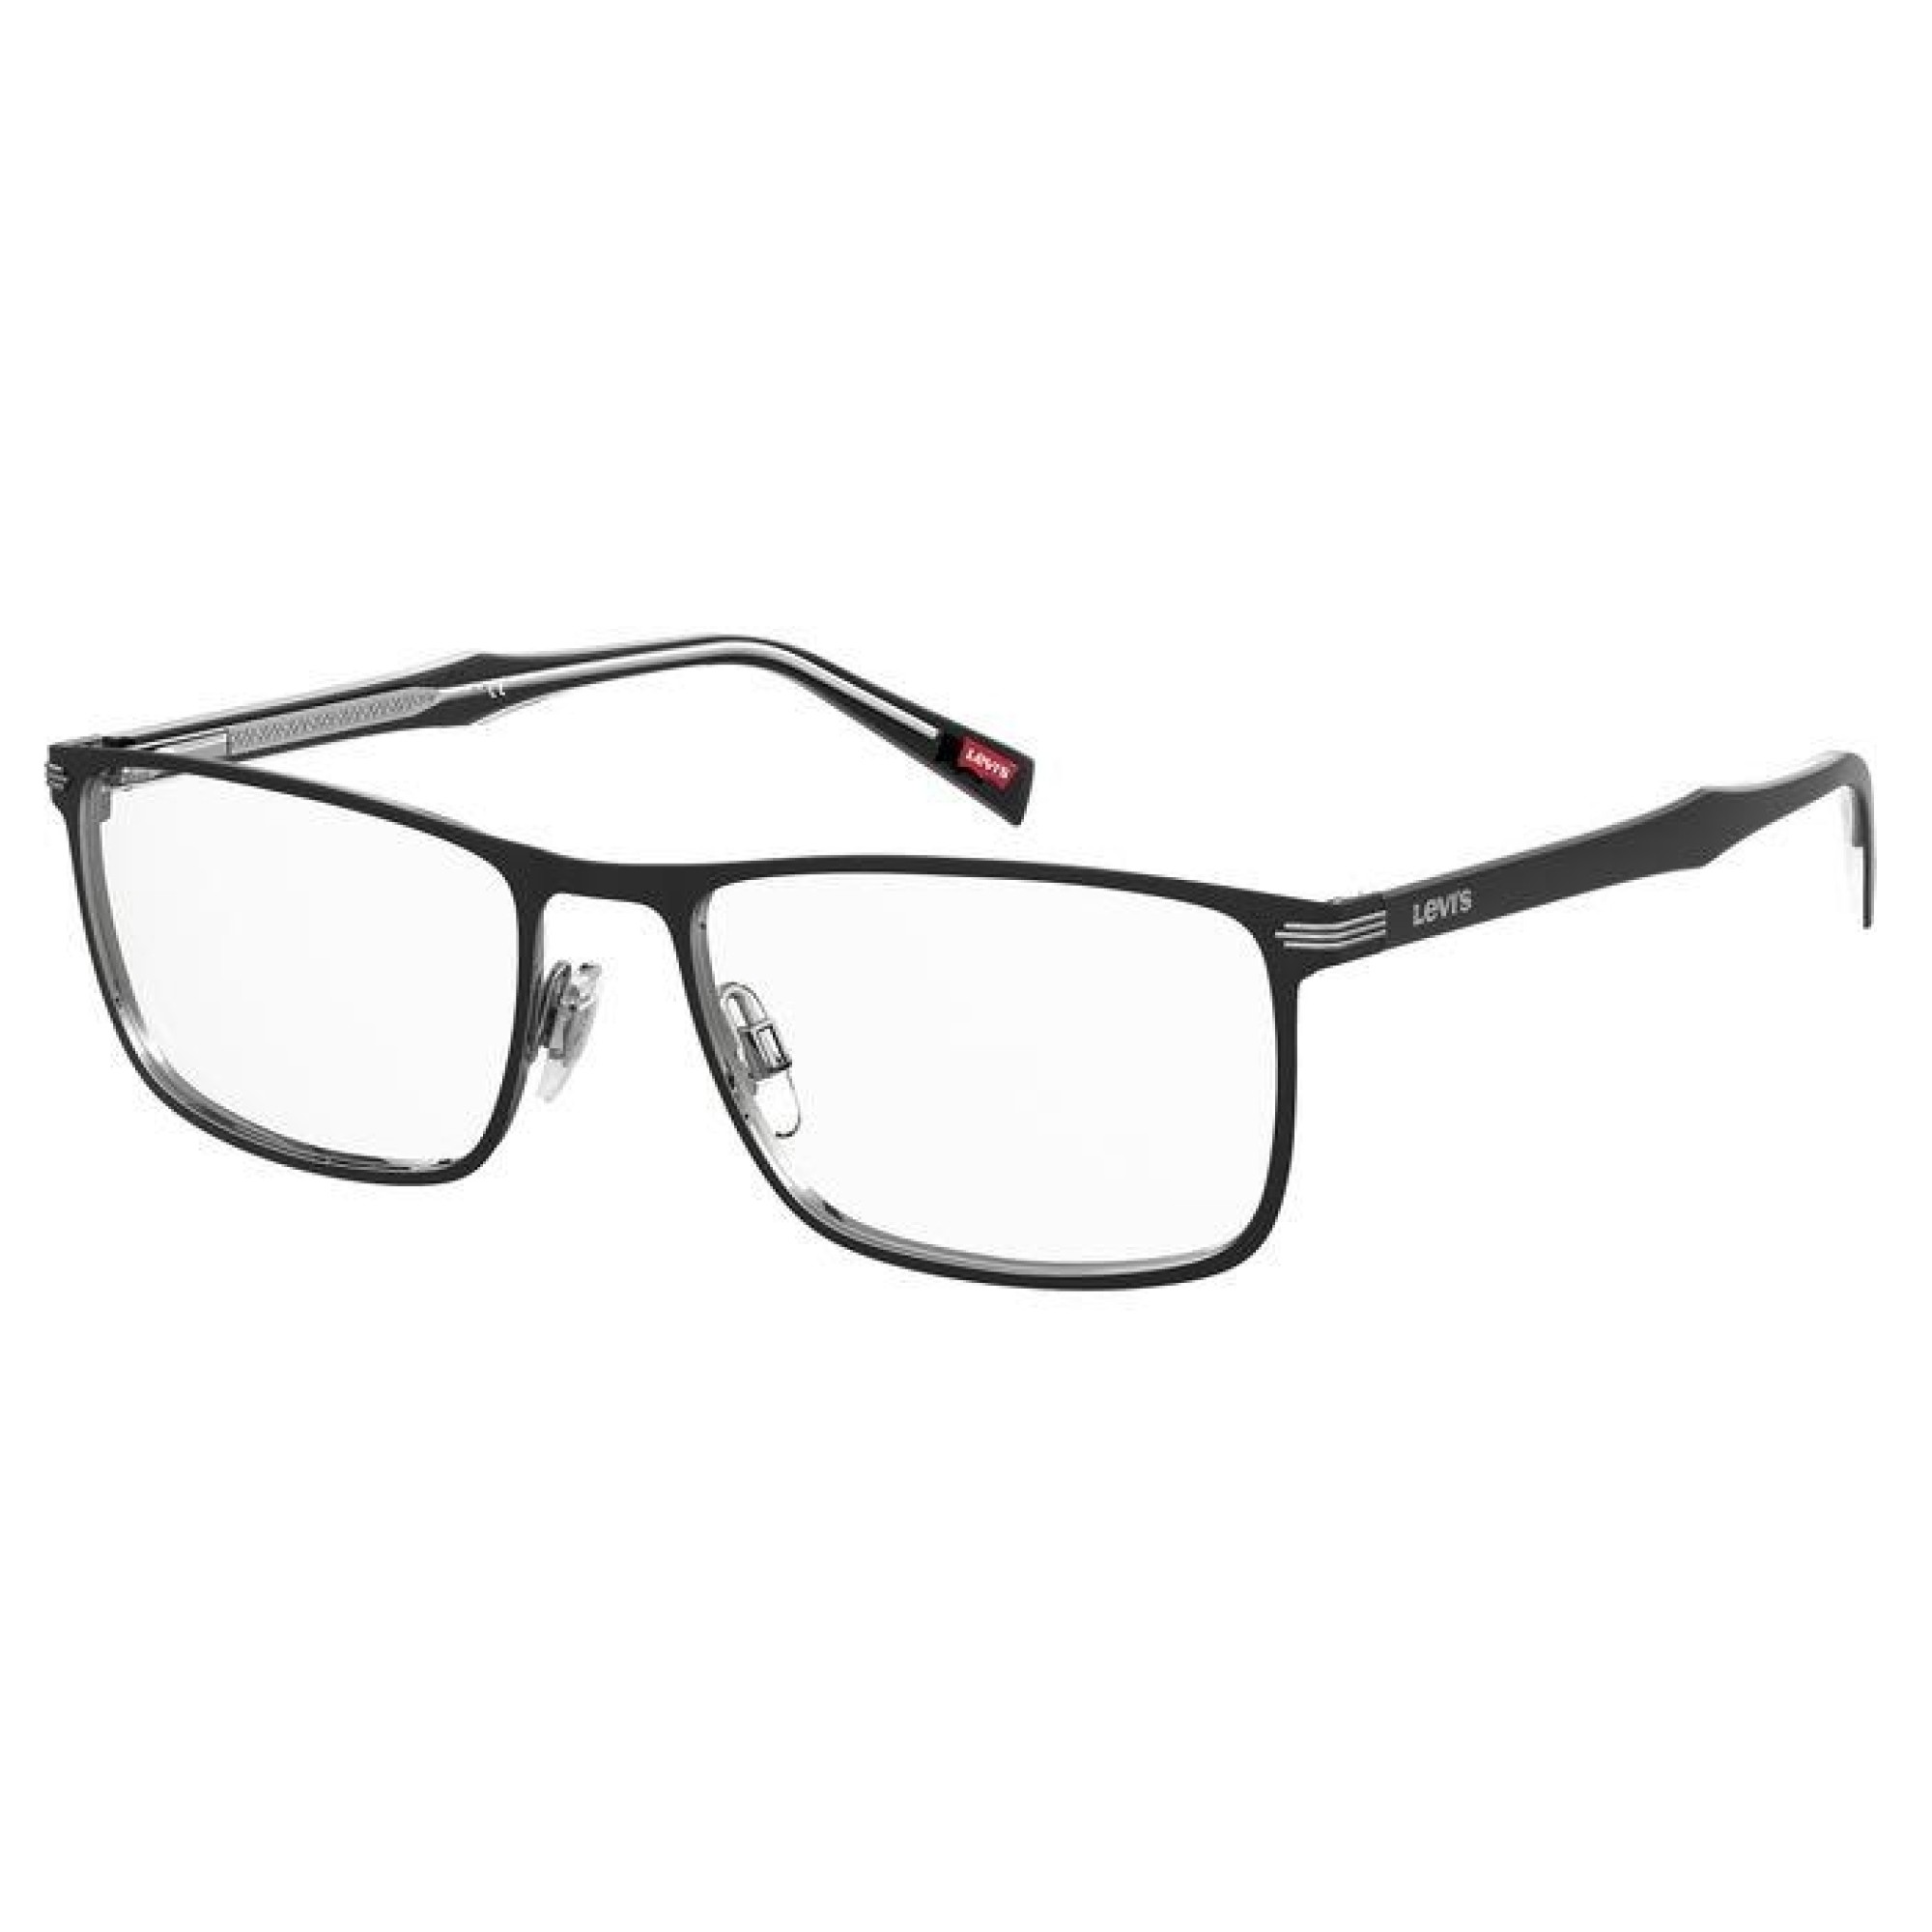 Levis LV 5033 - 807 Black | Eyeglasses Man